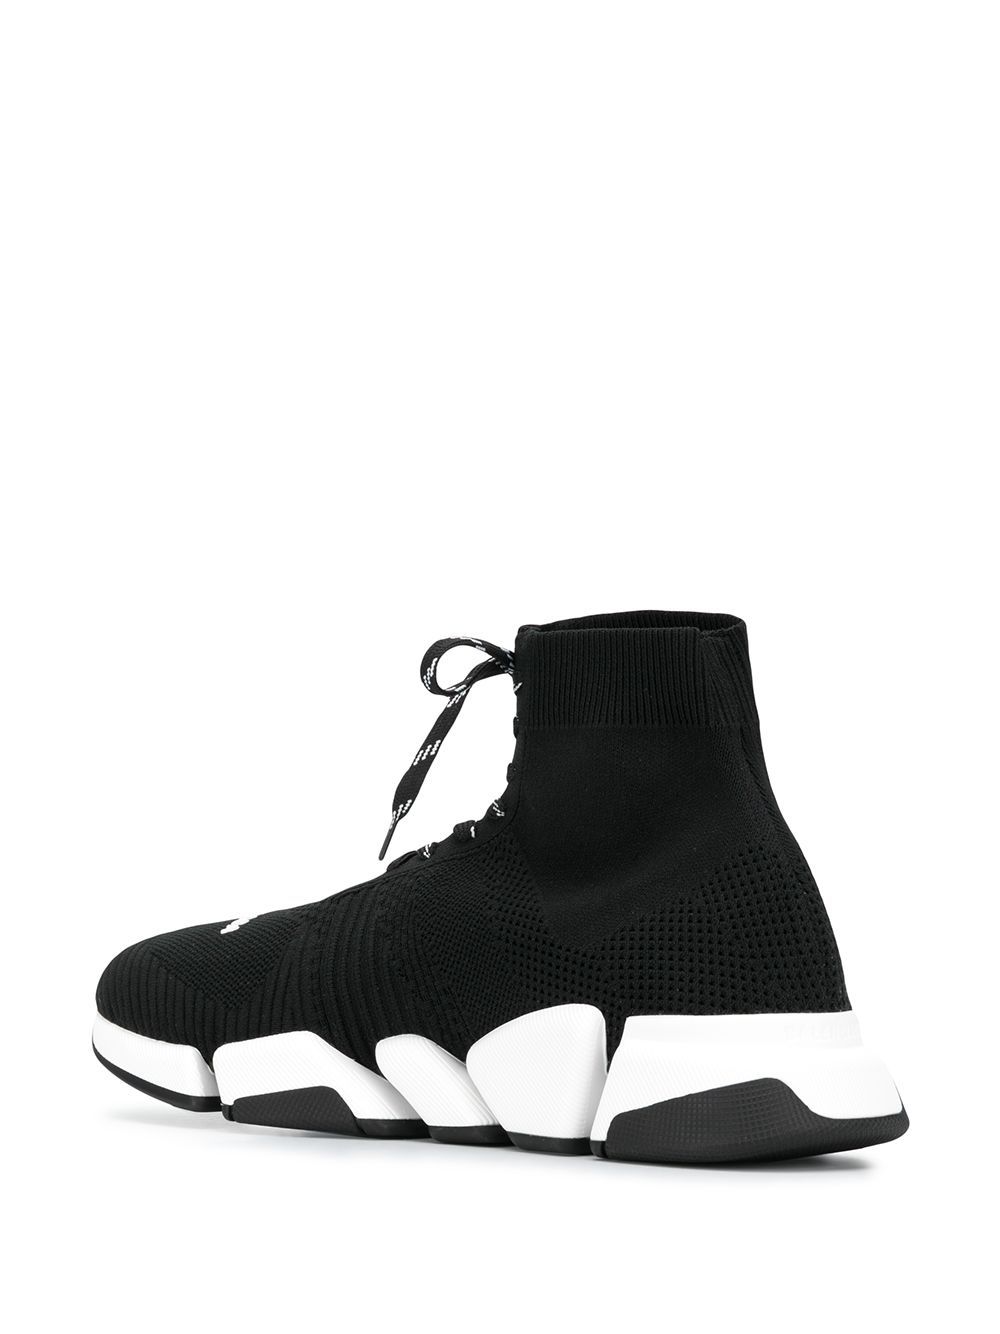 BALENCIAGA Speed 2.0 Lace-Up Sneaker Black/White - Maison De Fashion 